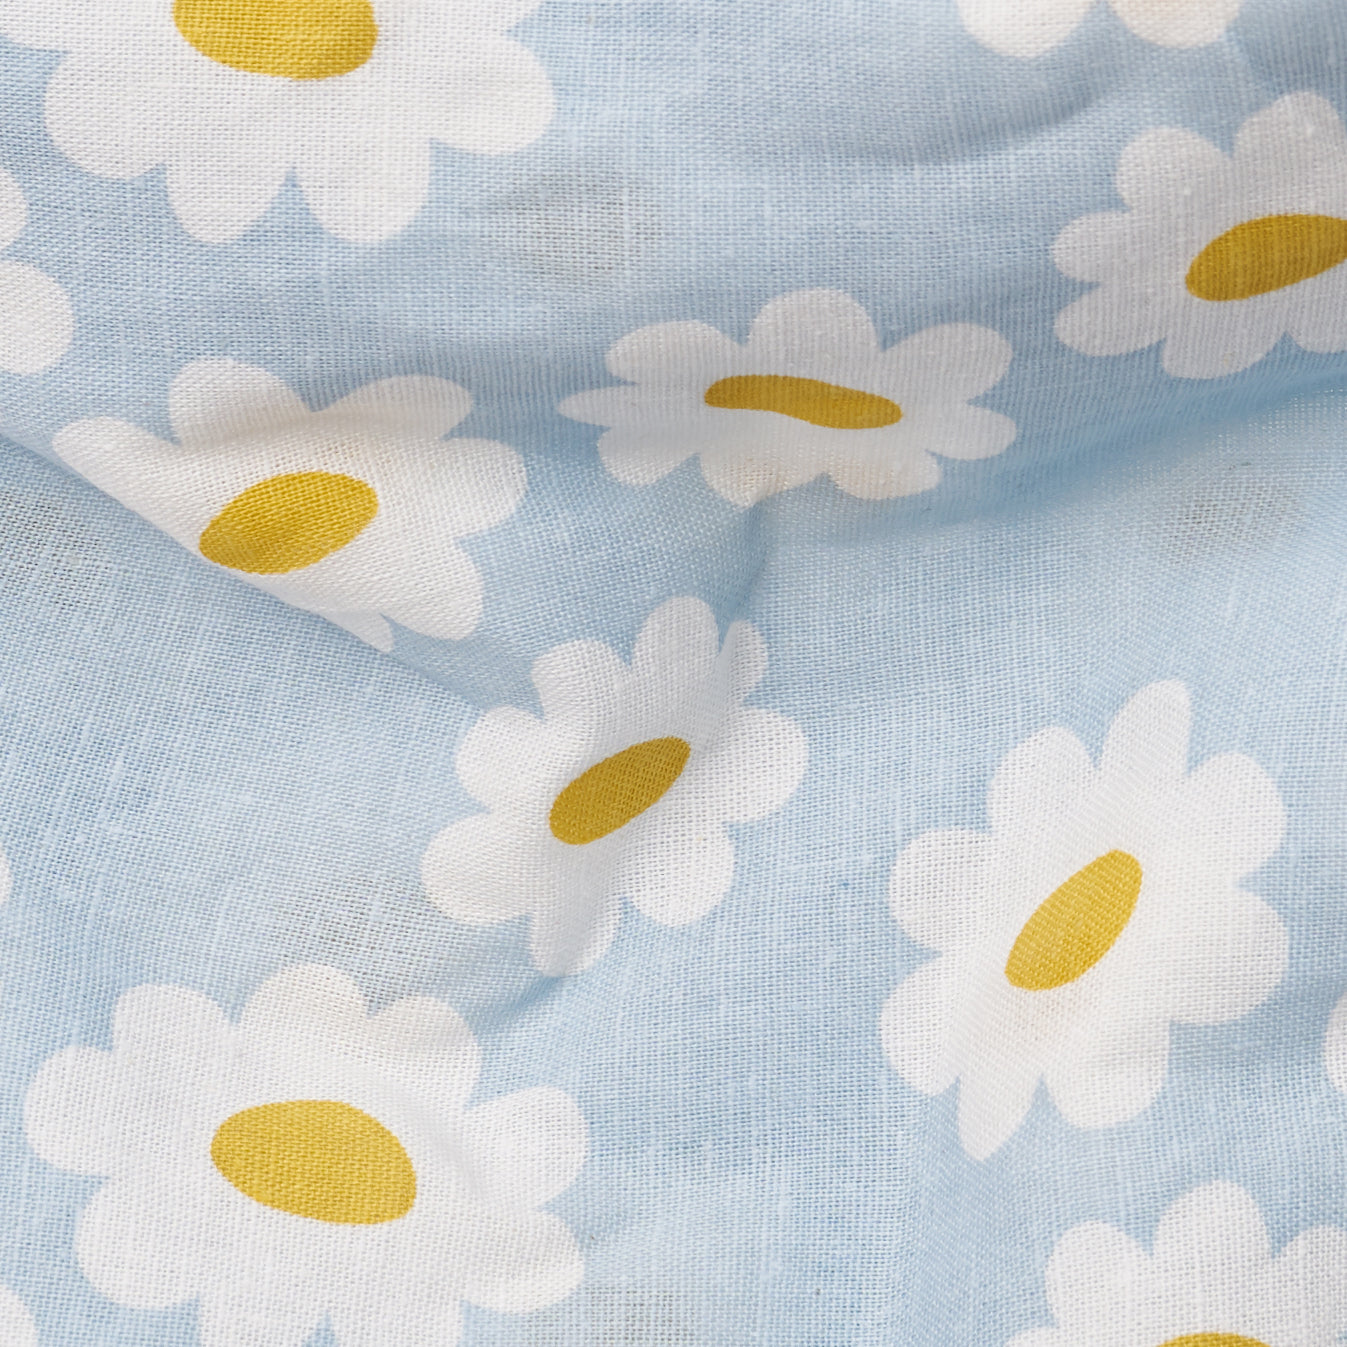 Blue Daisy Chain Fabric Close Up